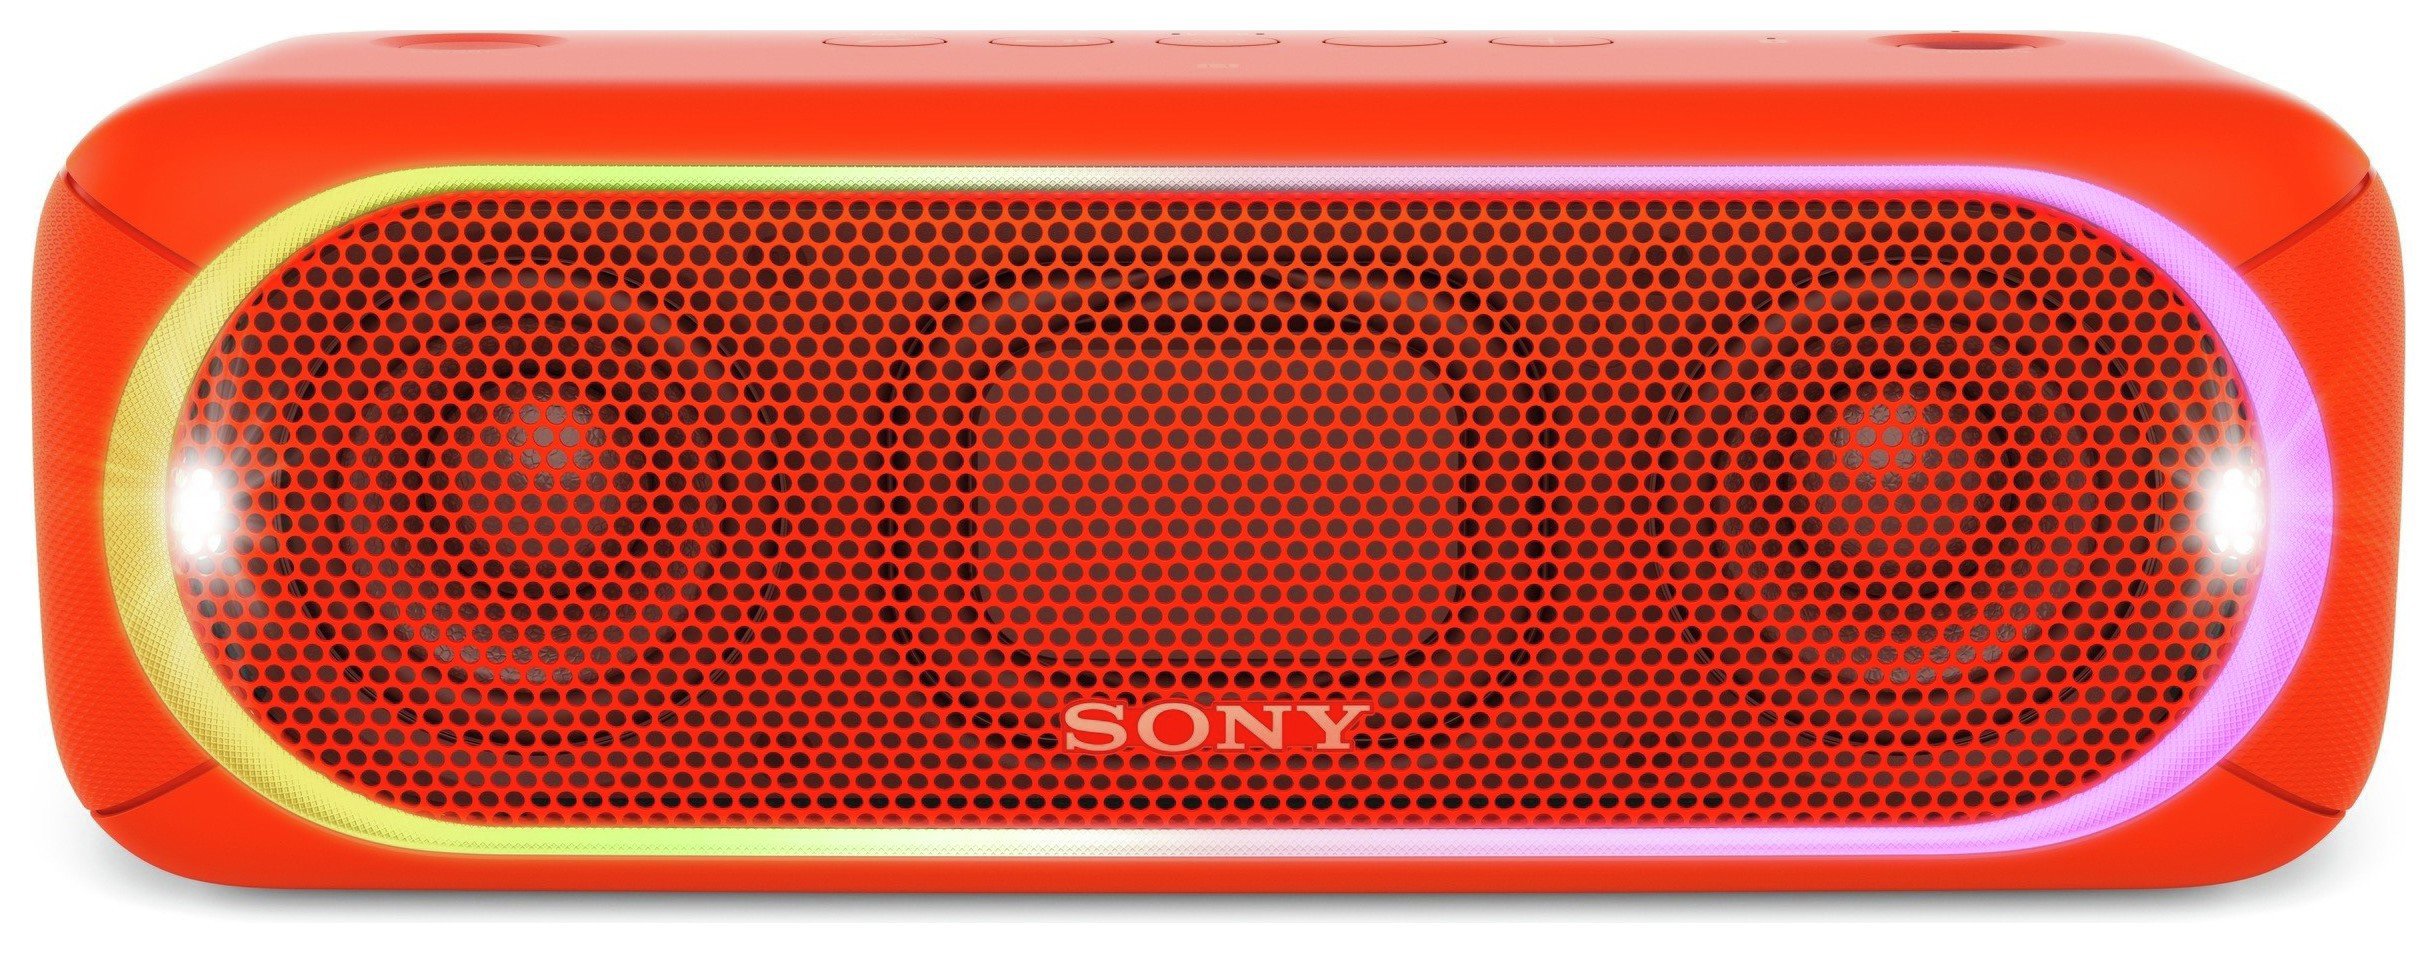 Sony SRSXB30R Portable Wireless Speaker Review